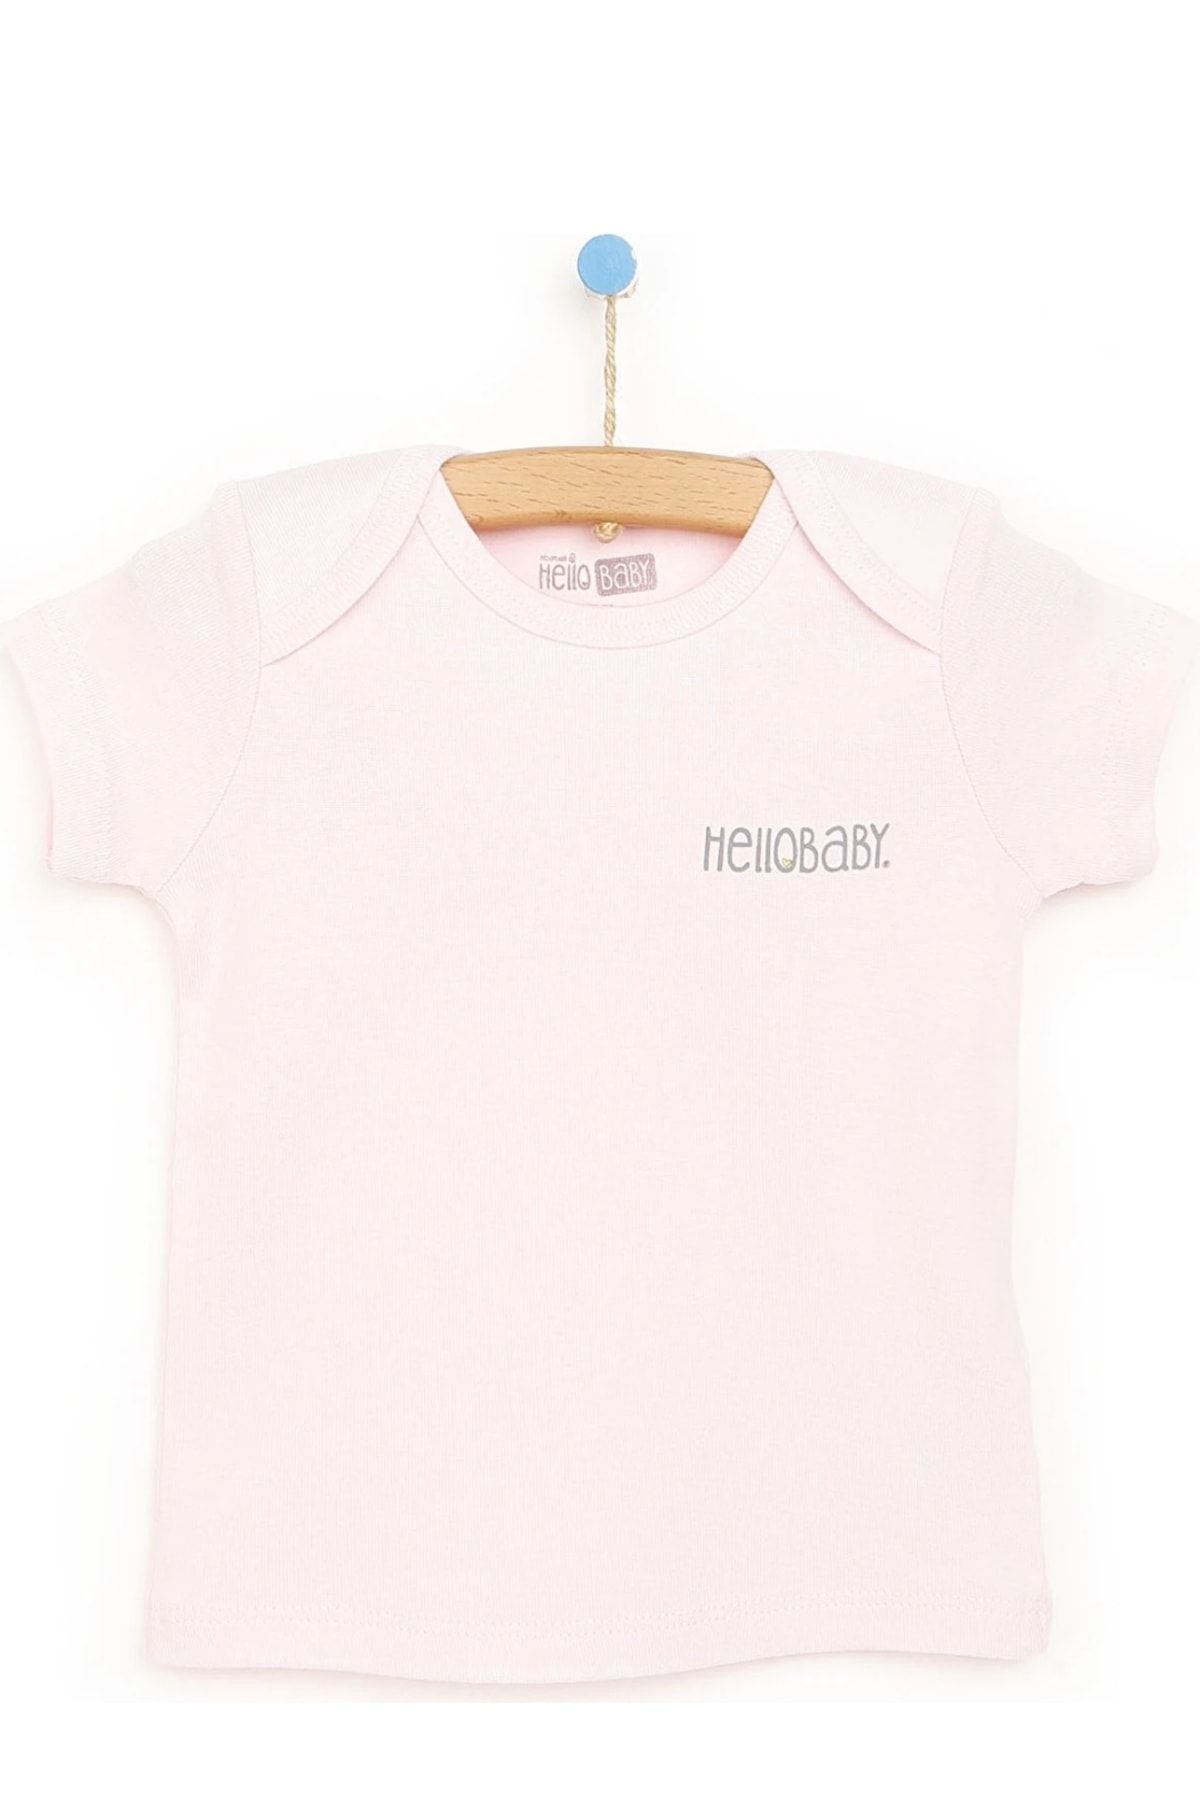 HelloBaby Basic Ribana Kız Bebek T-shirt